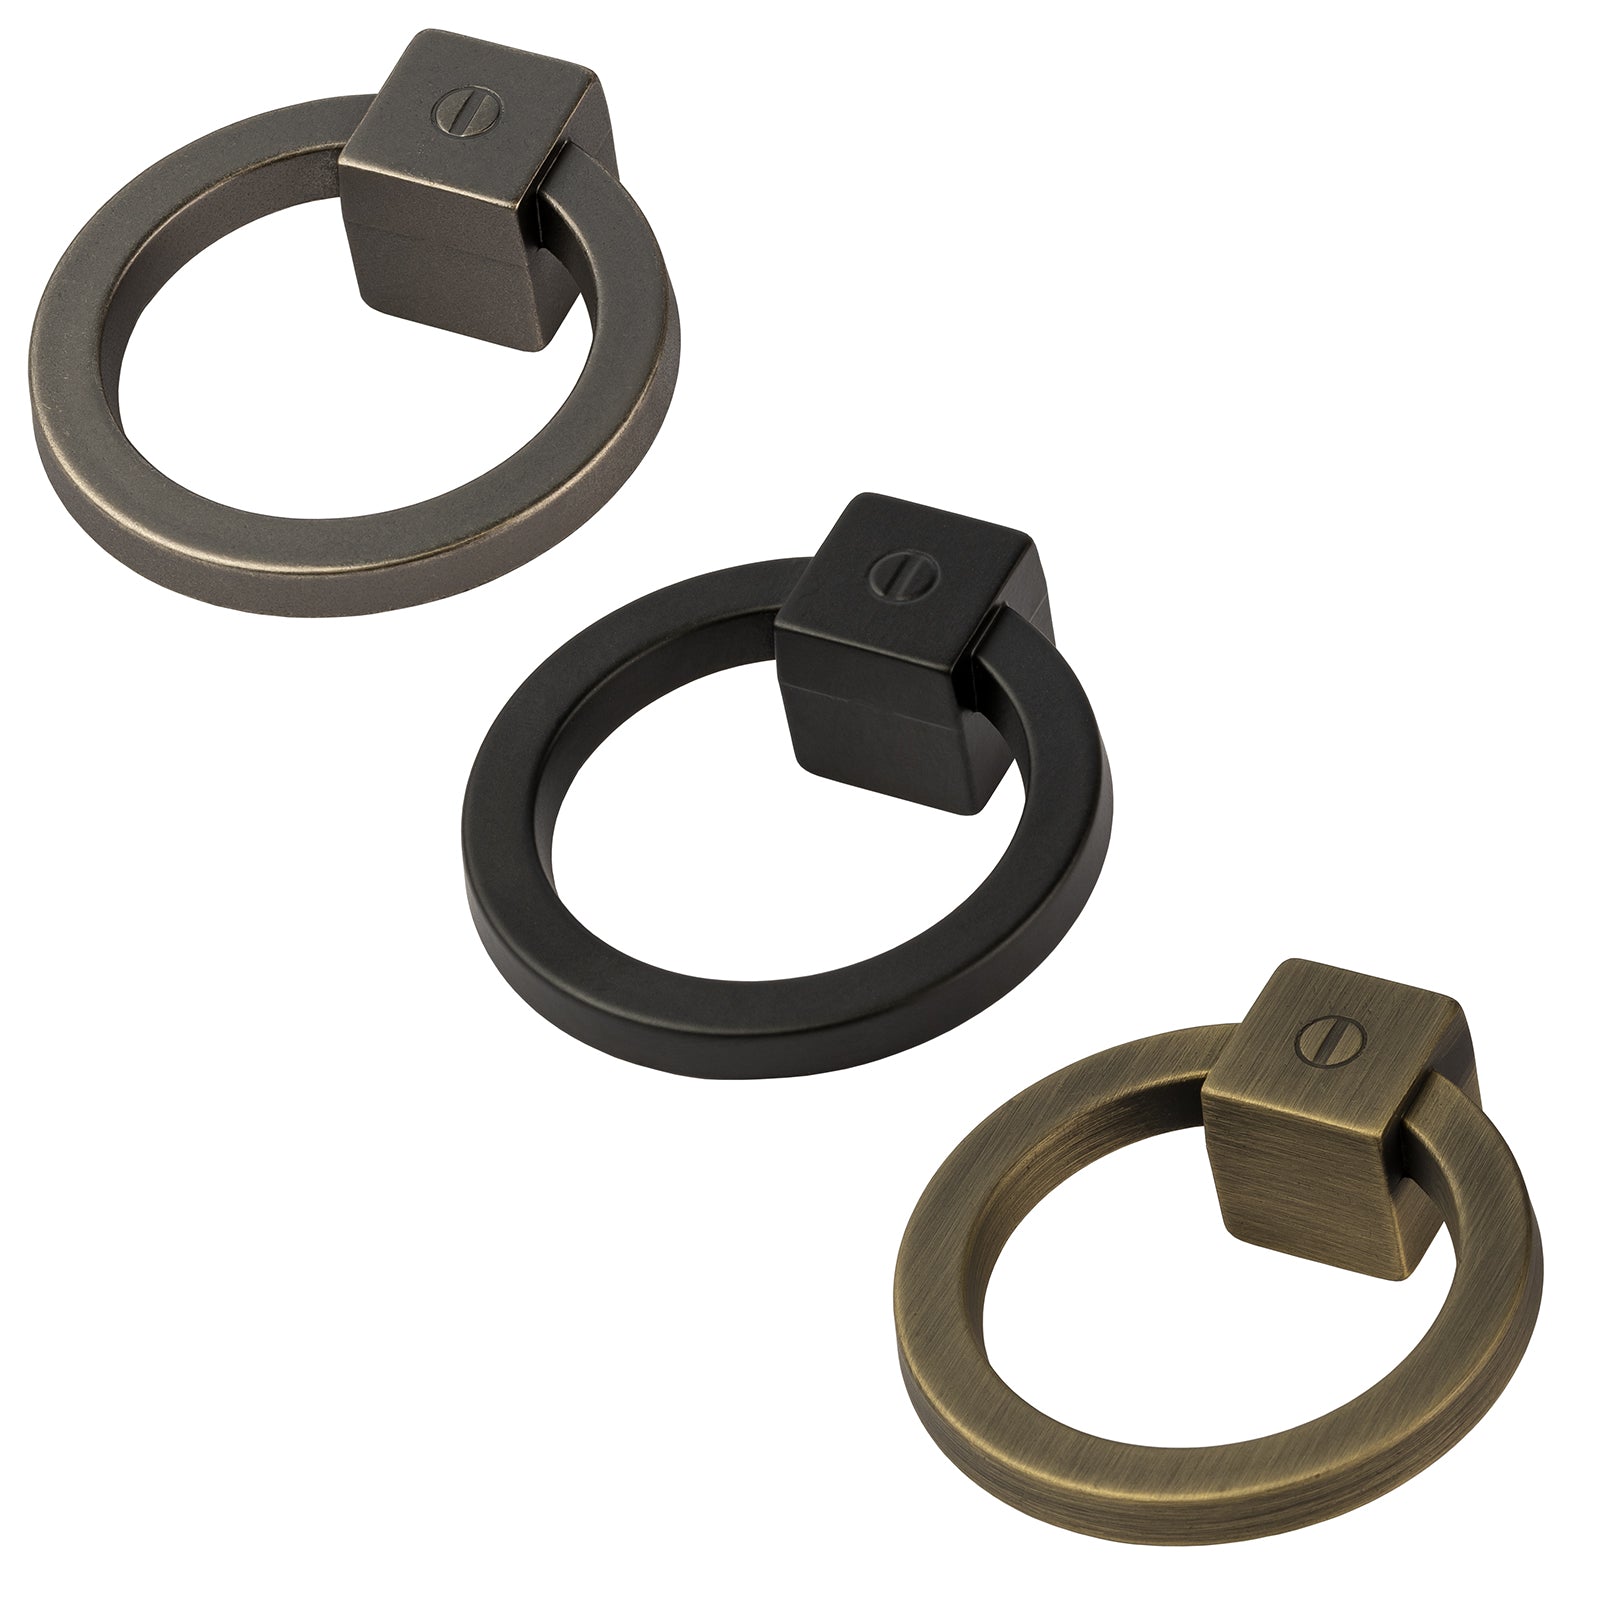 Ring Cabinet Pull, Modern pull handles